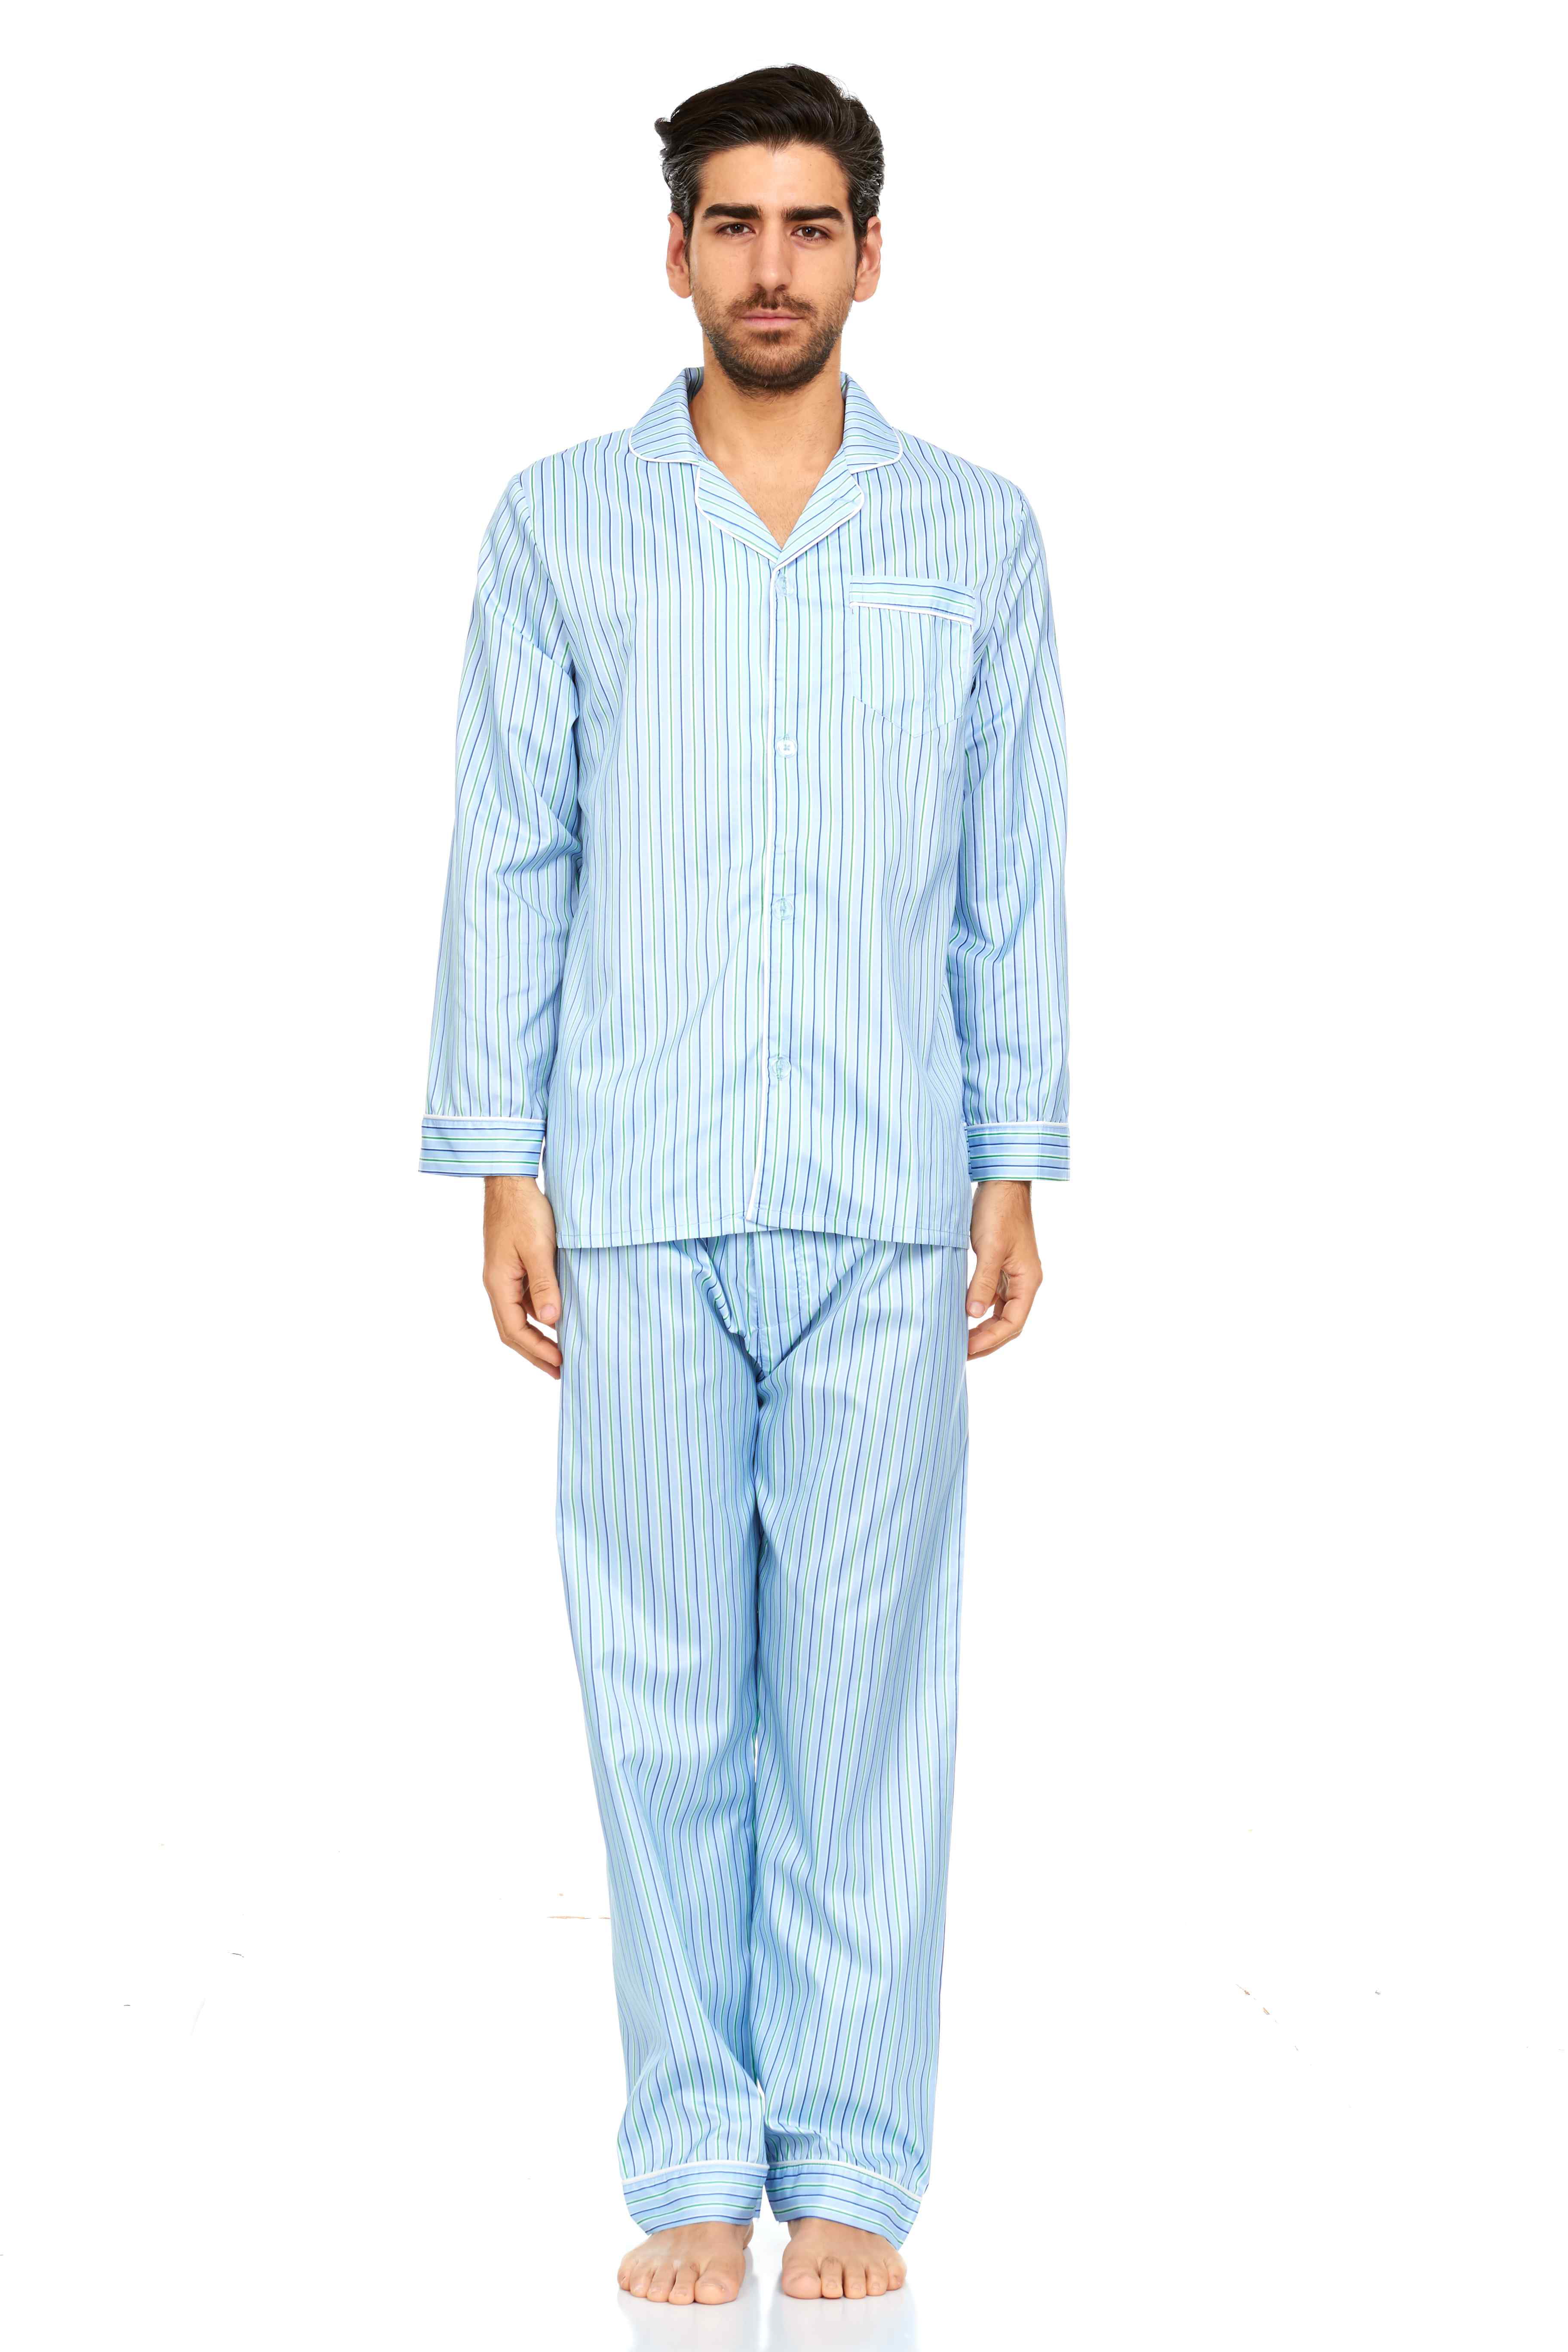 EZI Men's Cotton-rich Pajama PJ Set - Walmart.com